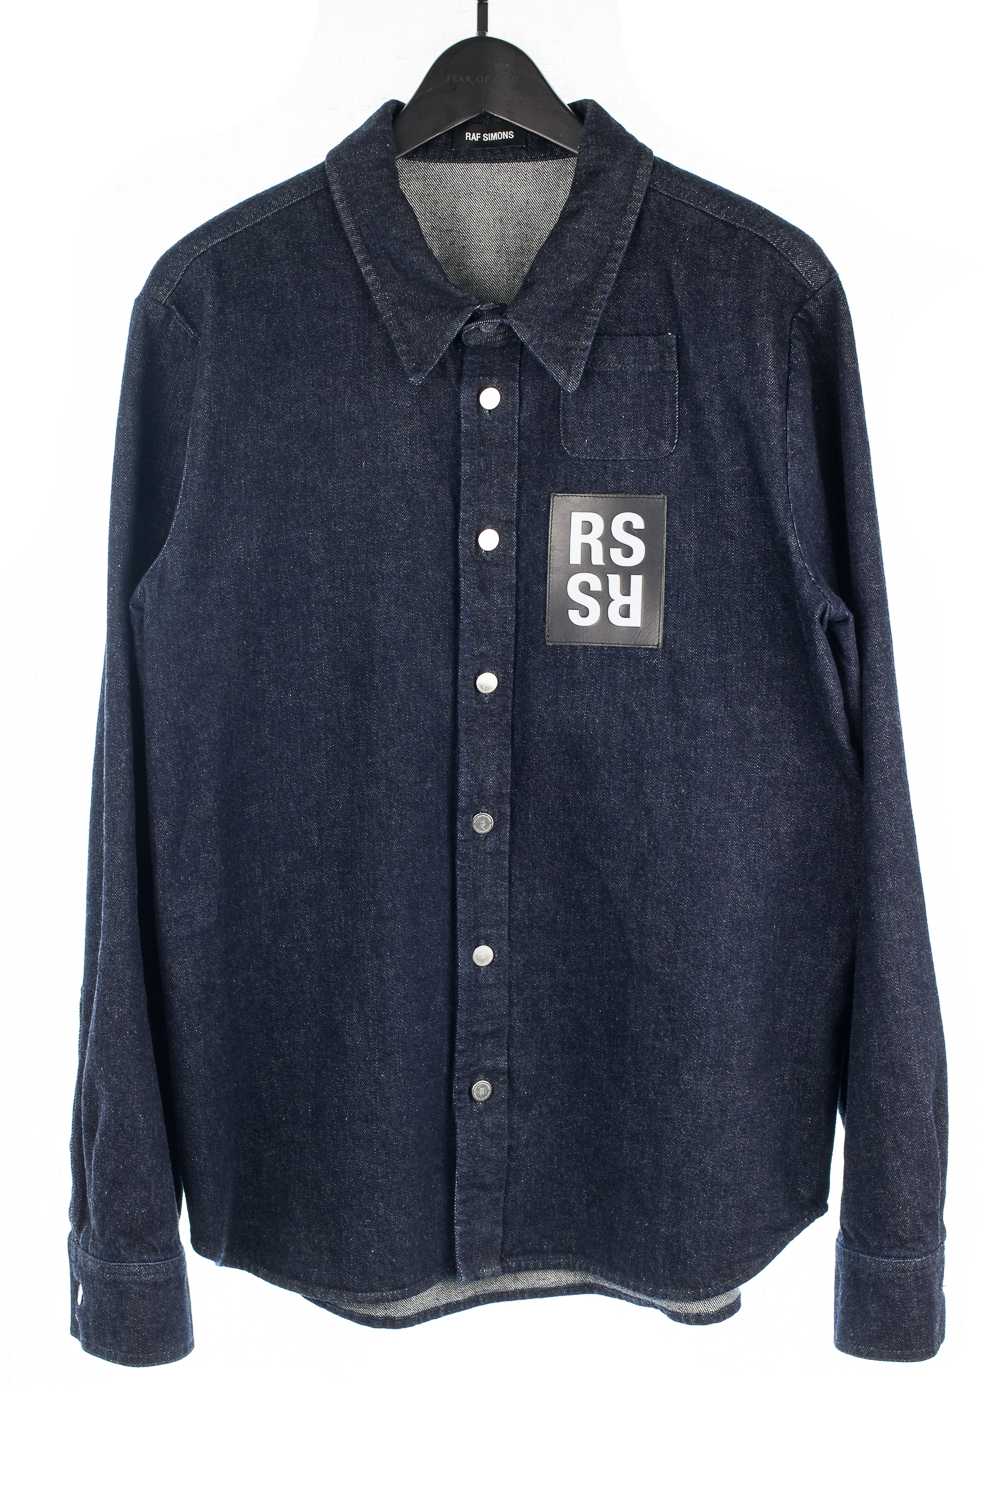 “RS” Patchwork Heavy Denim Shirt Jacket - image 1